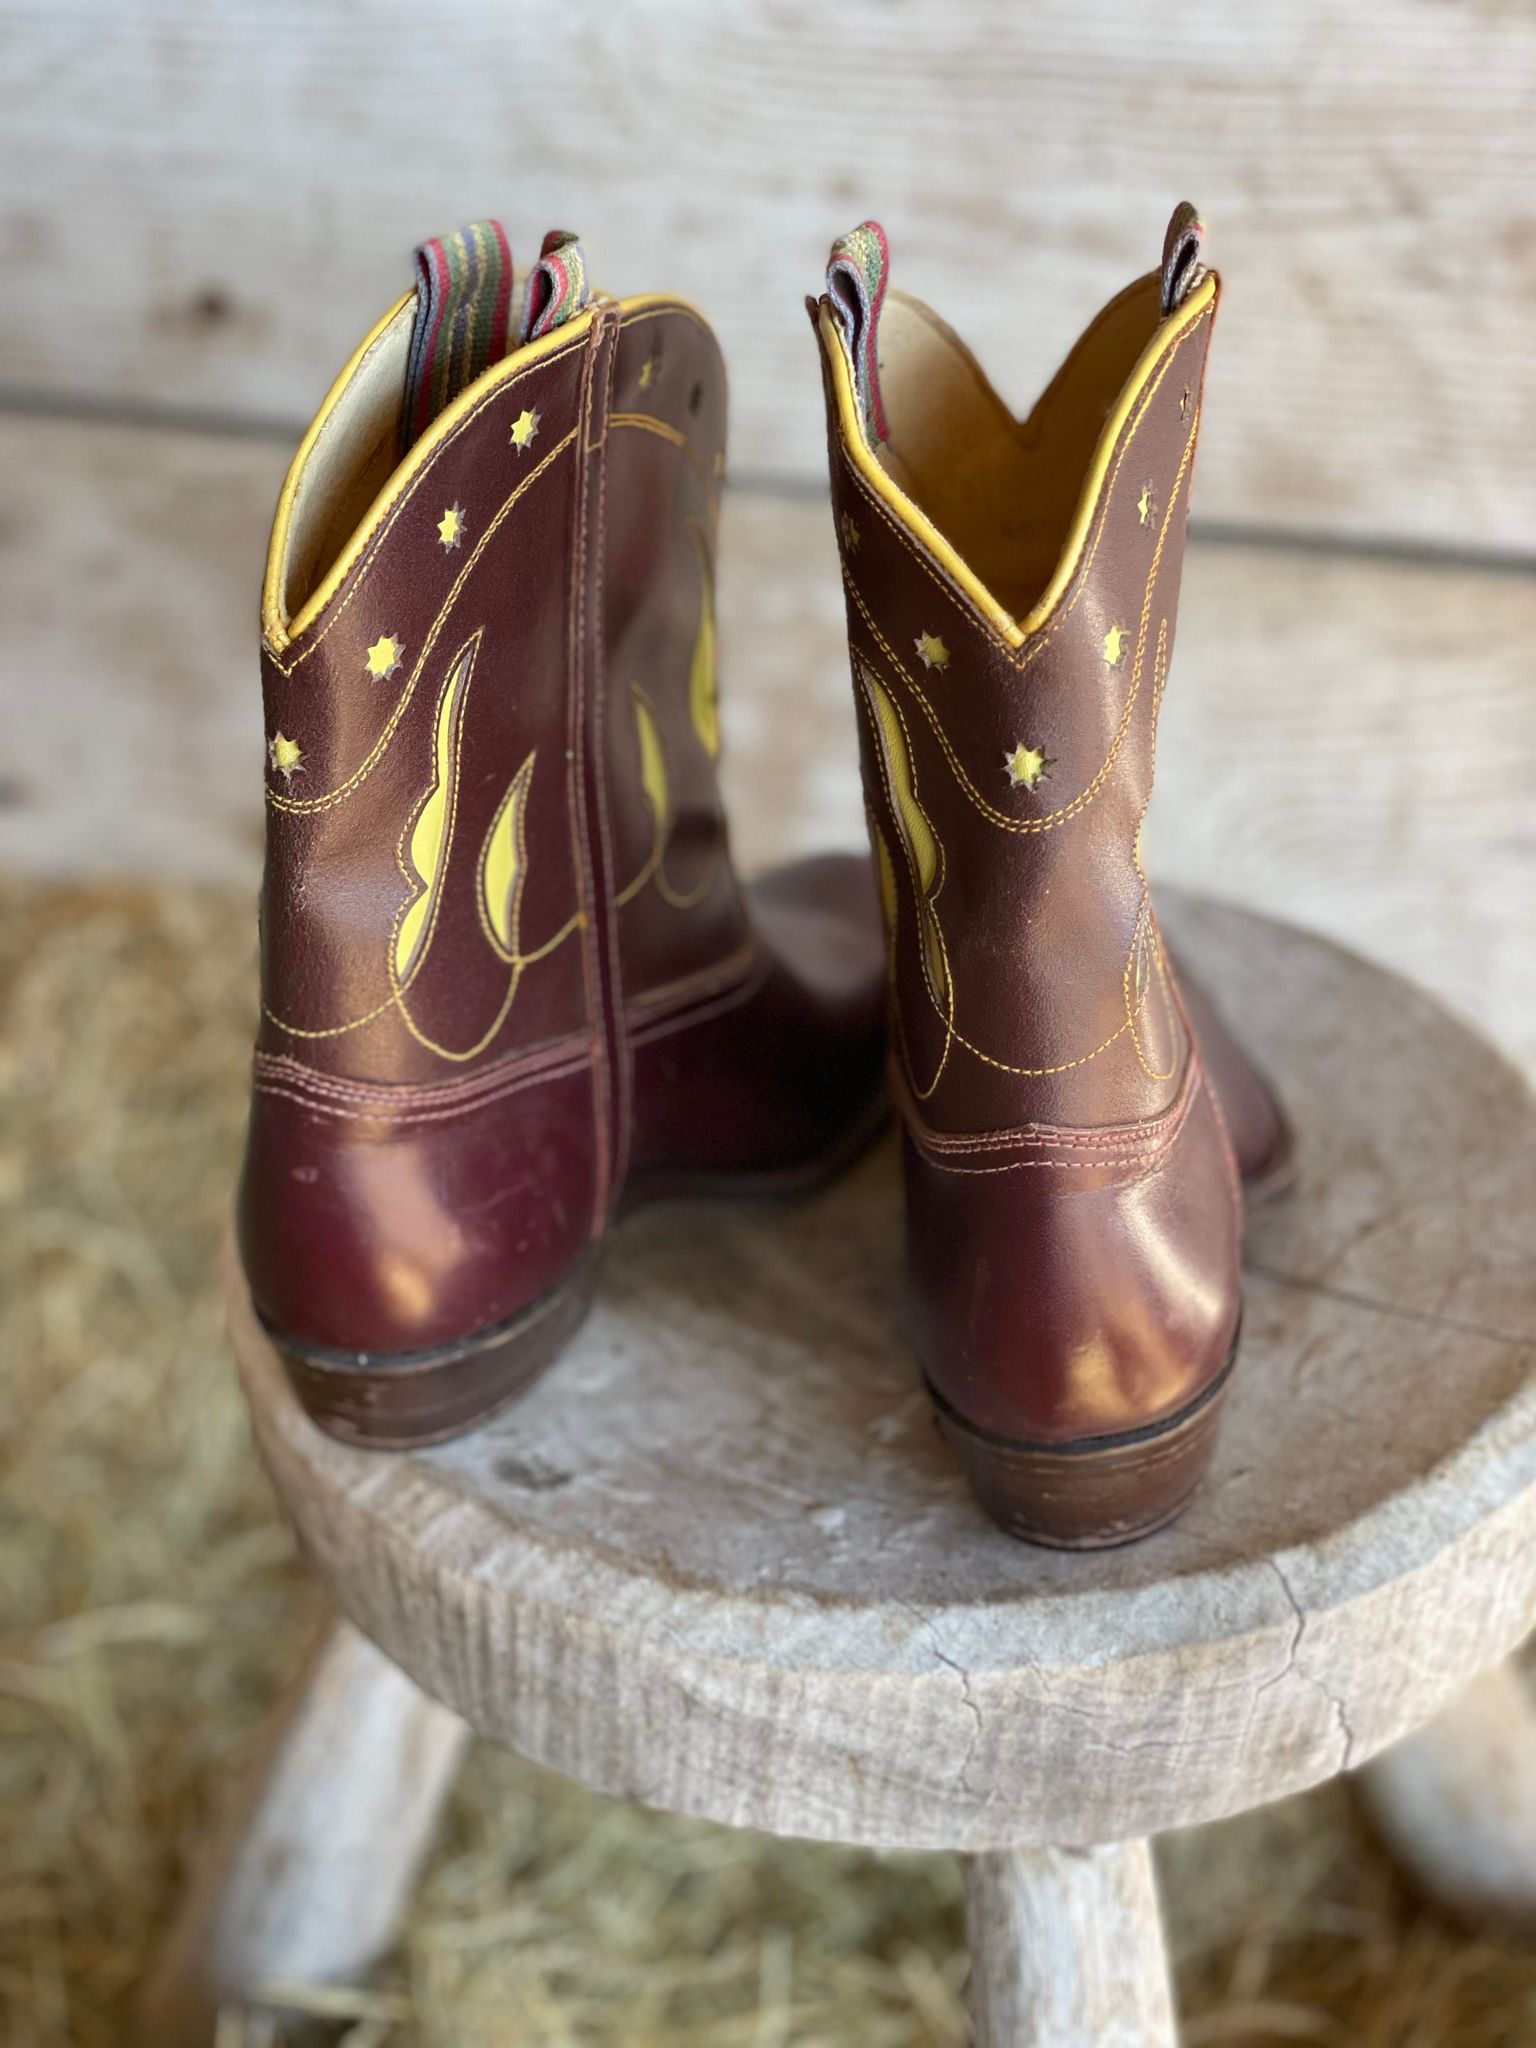 1950's Cowboy Boots - Never Worn